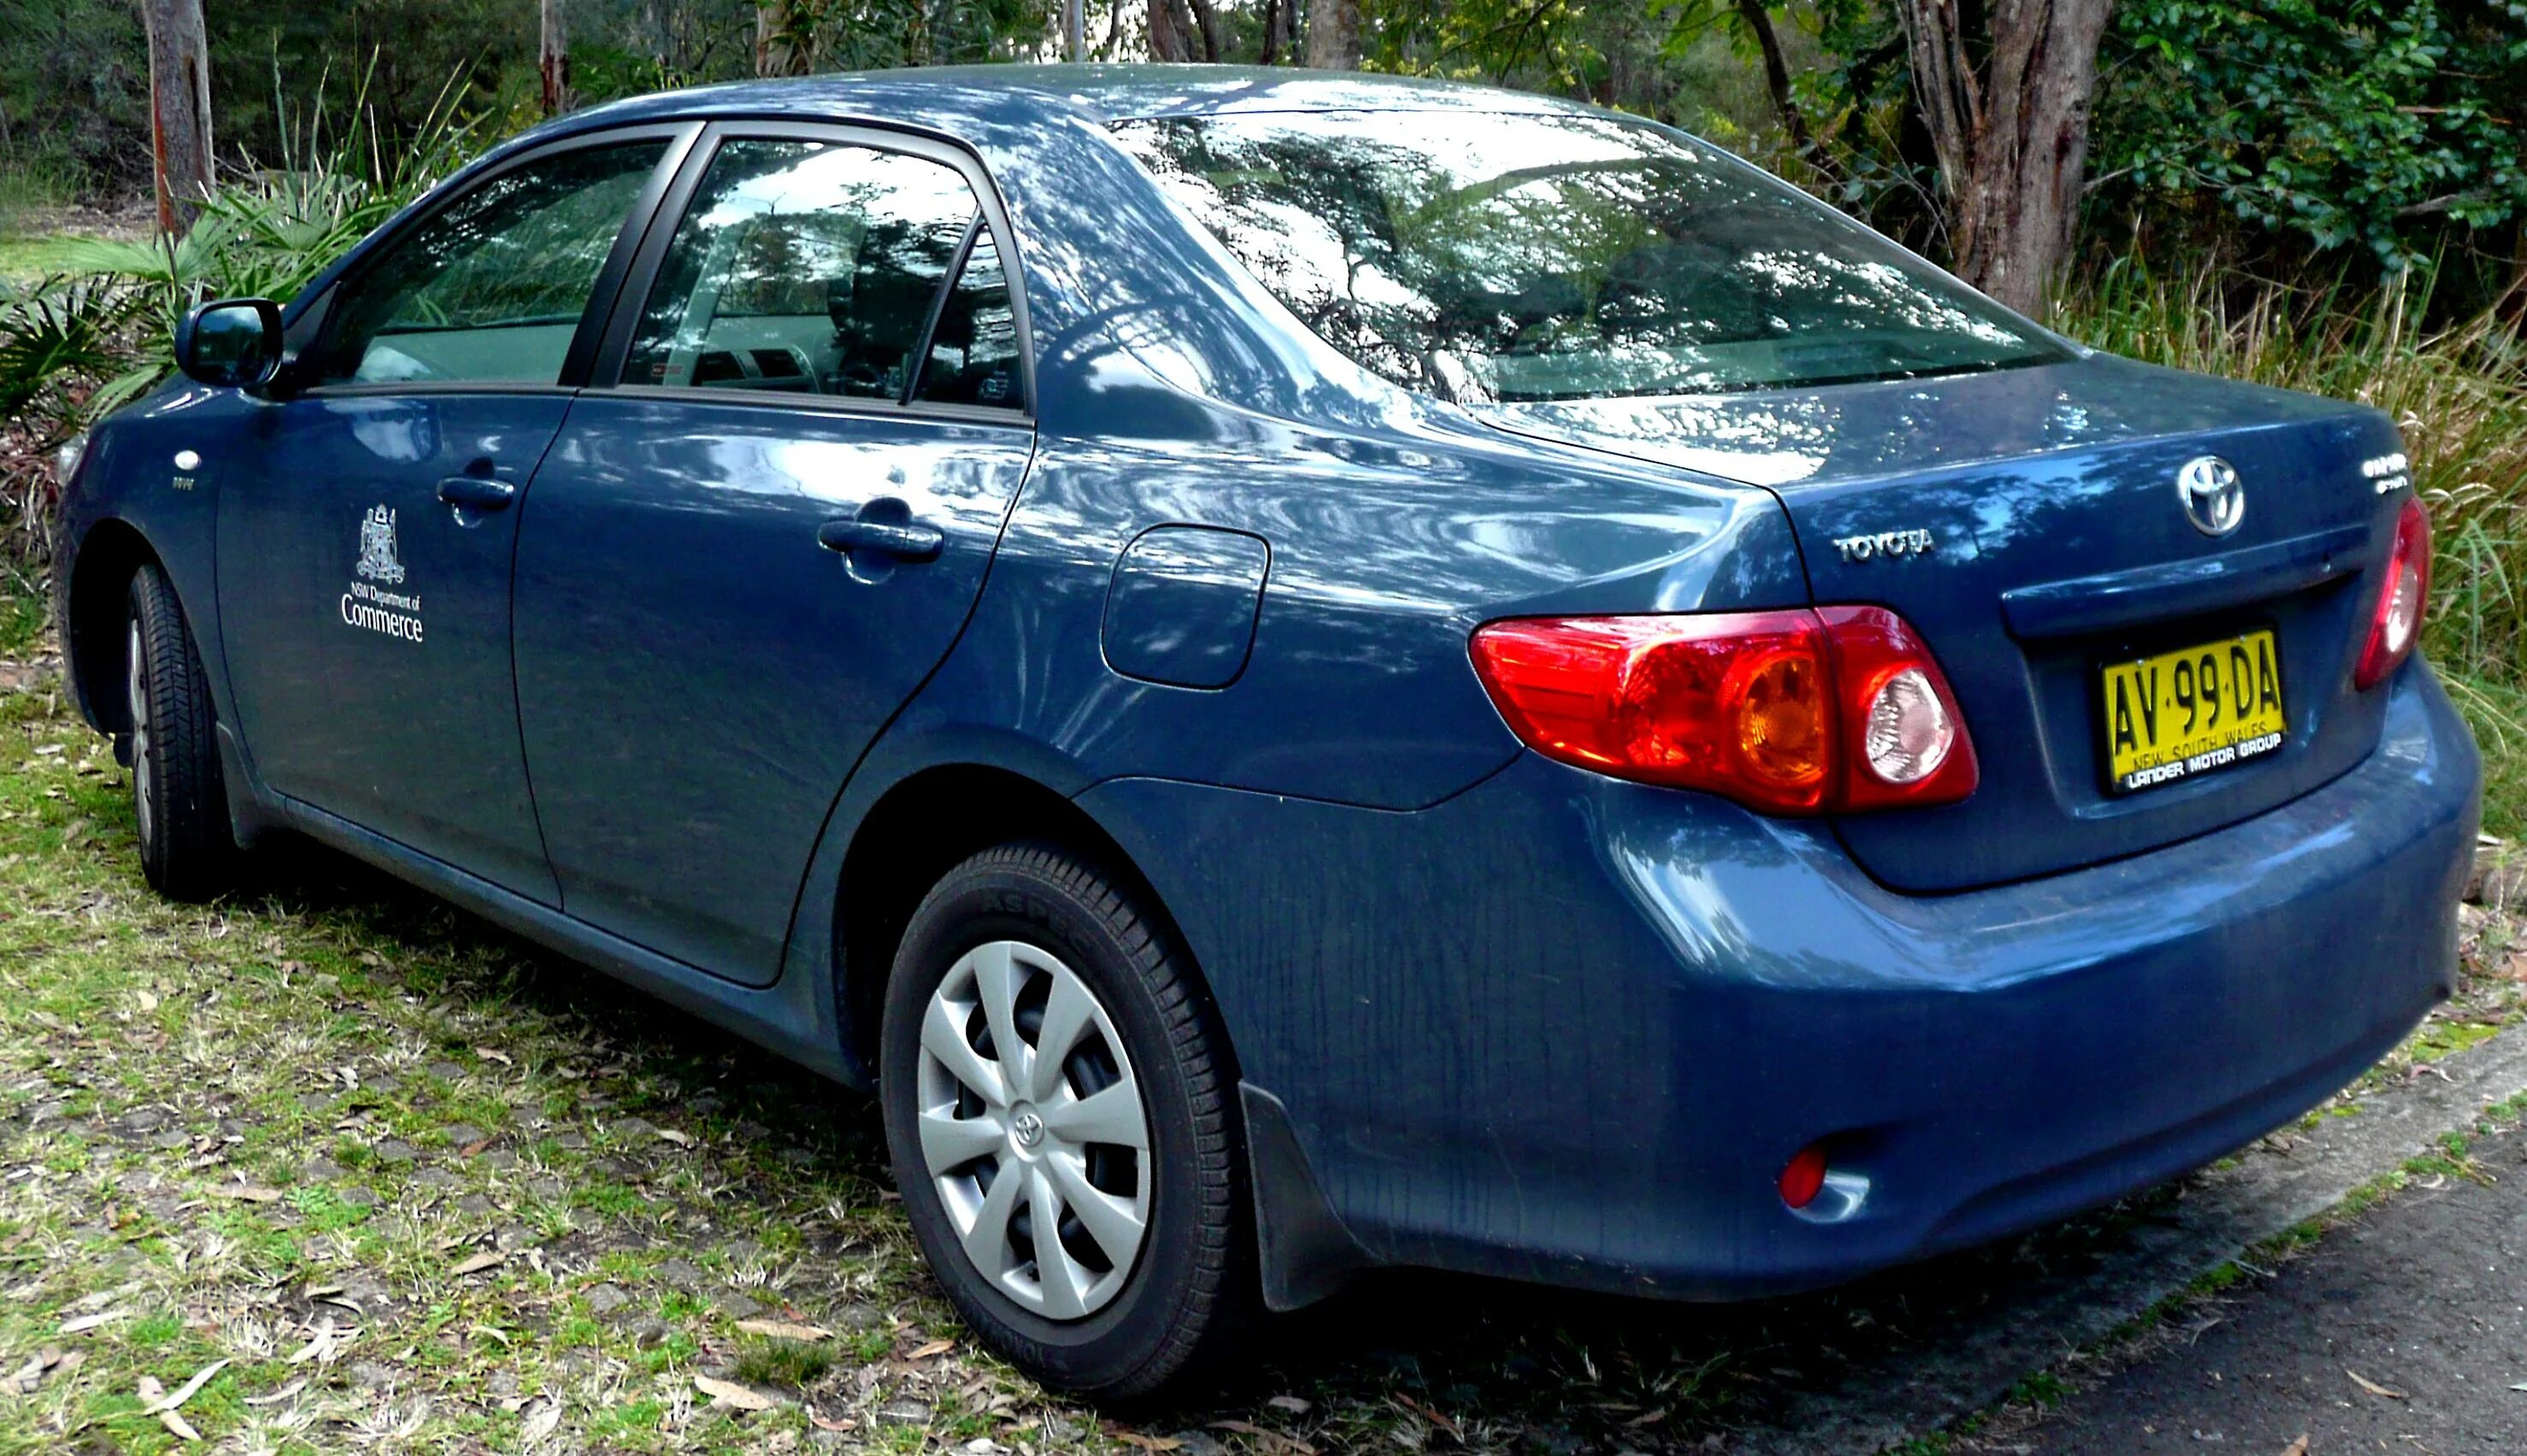 Toyota Corolla 2007. Тойота Королла седан 2007. Toyota Corolla 2007 седан. Тойота Королла 1 2007.